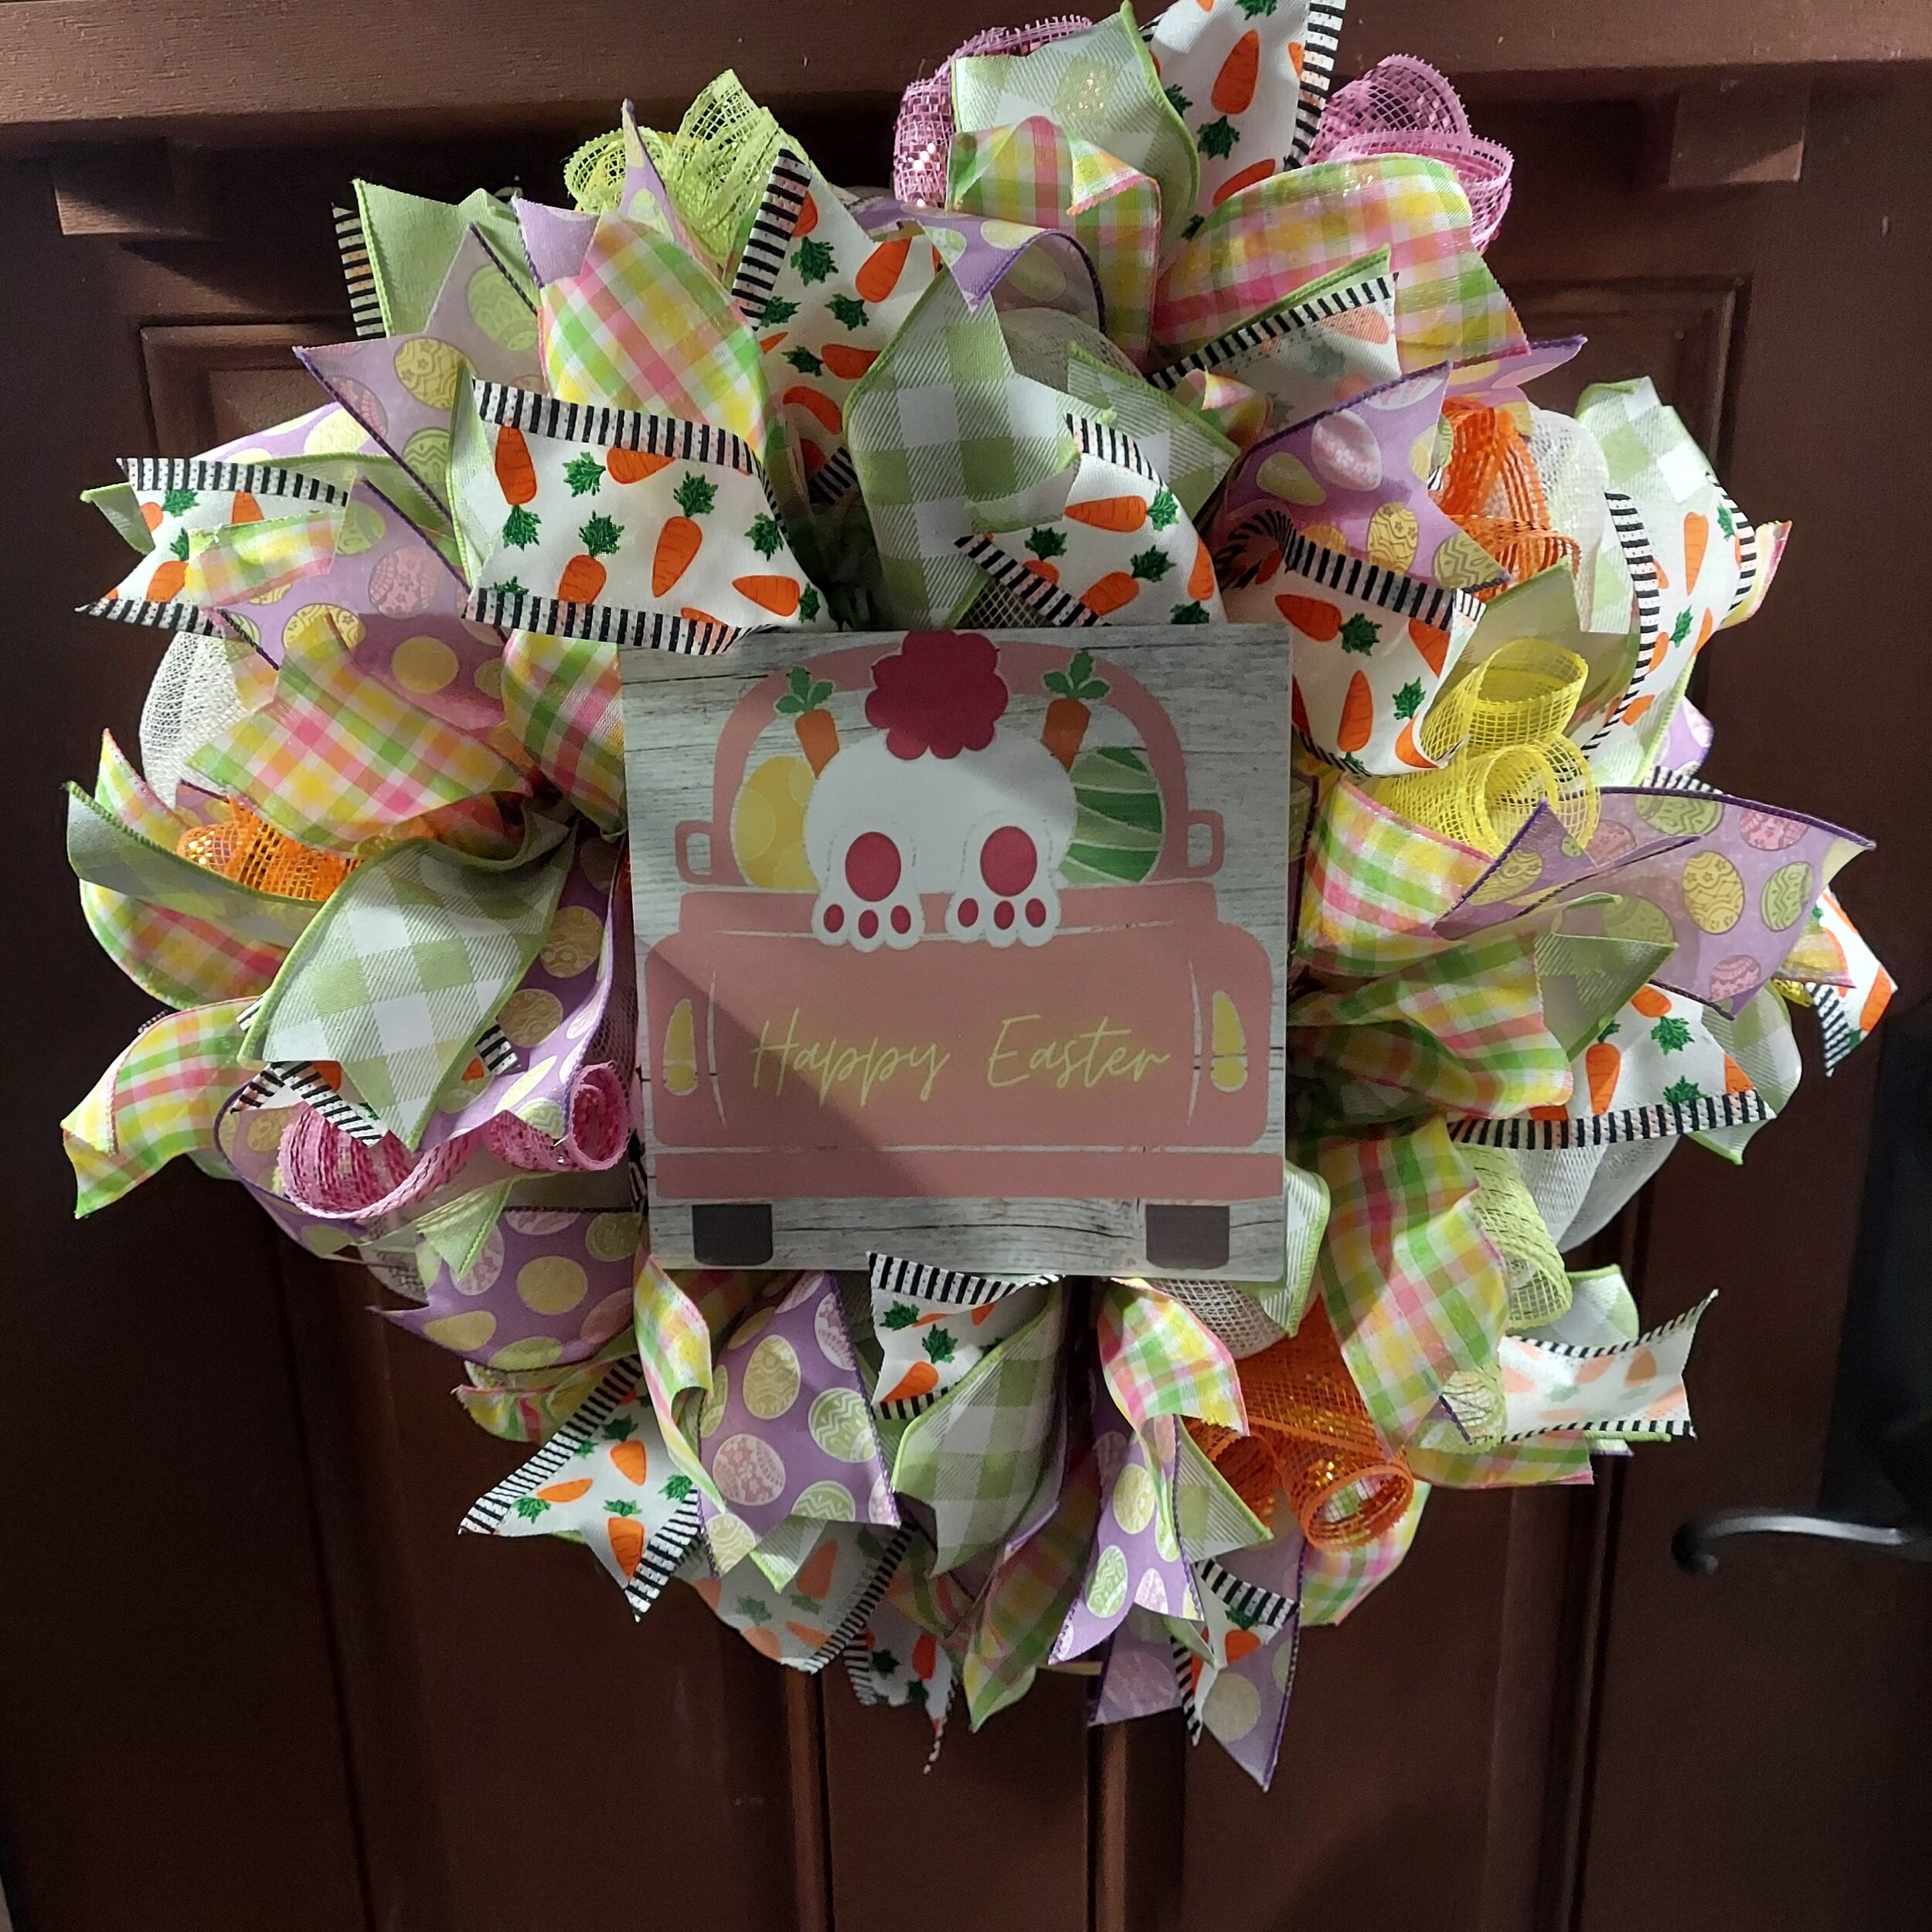 The Holiday Aisle® Pastel Egg Ribbon 24 Deco Mesh Wreath